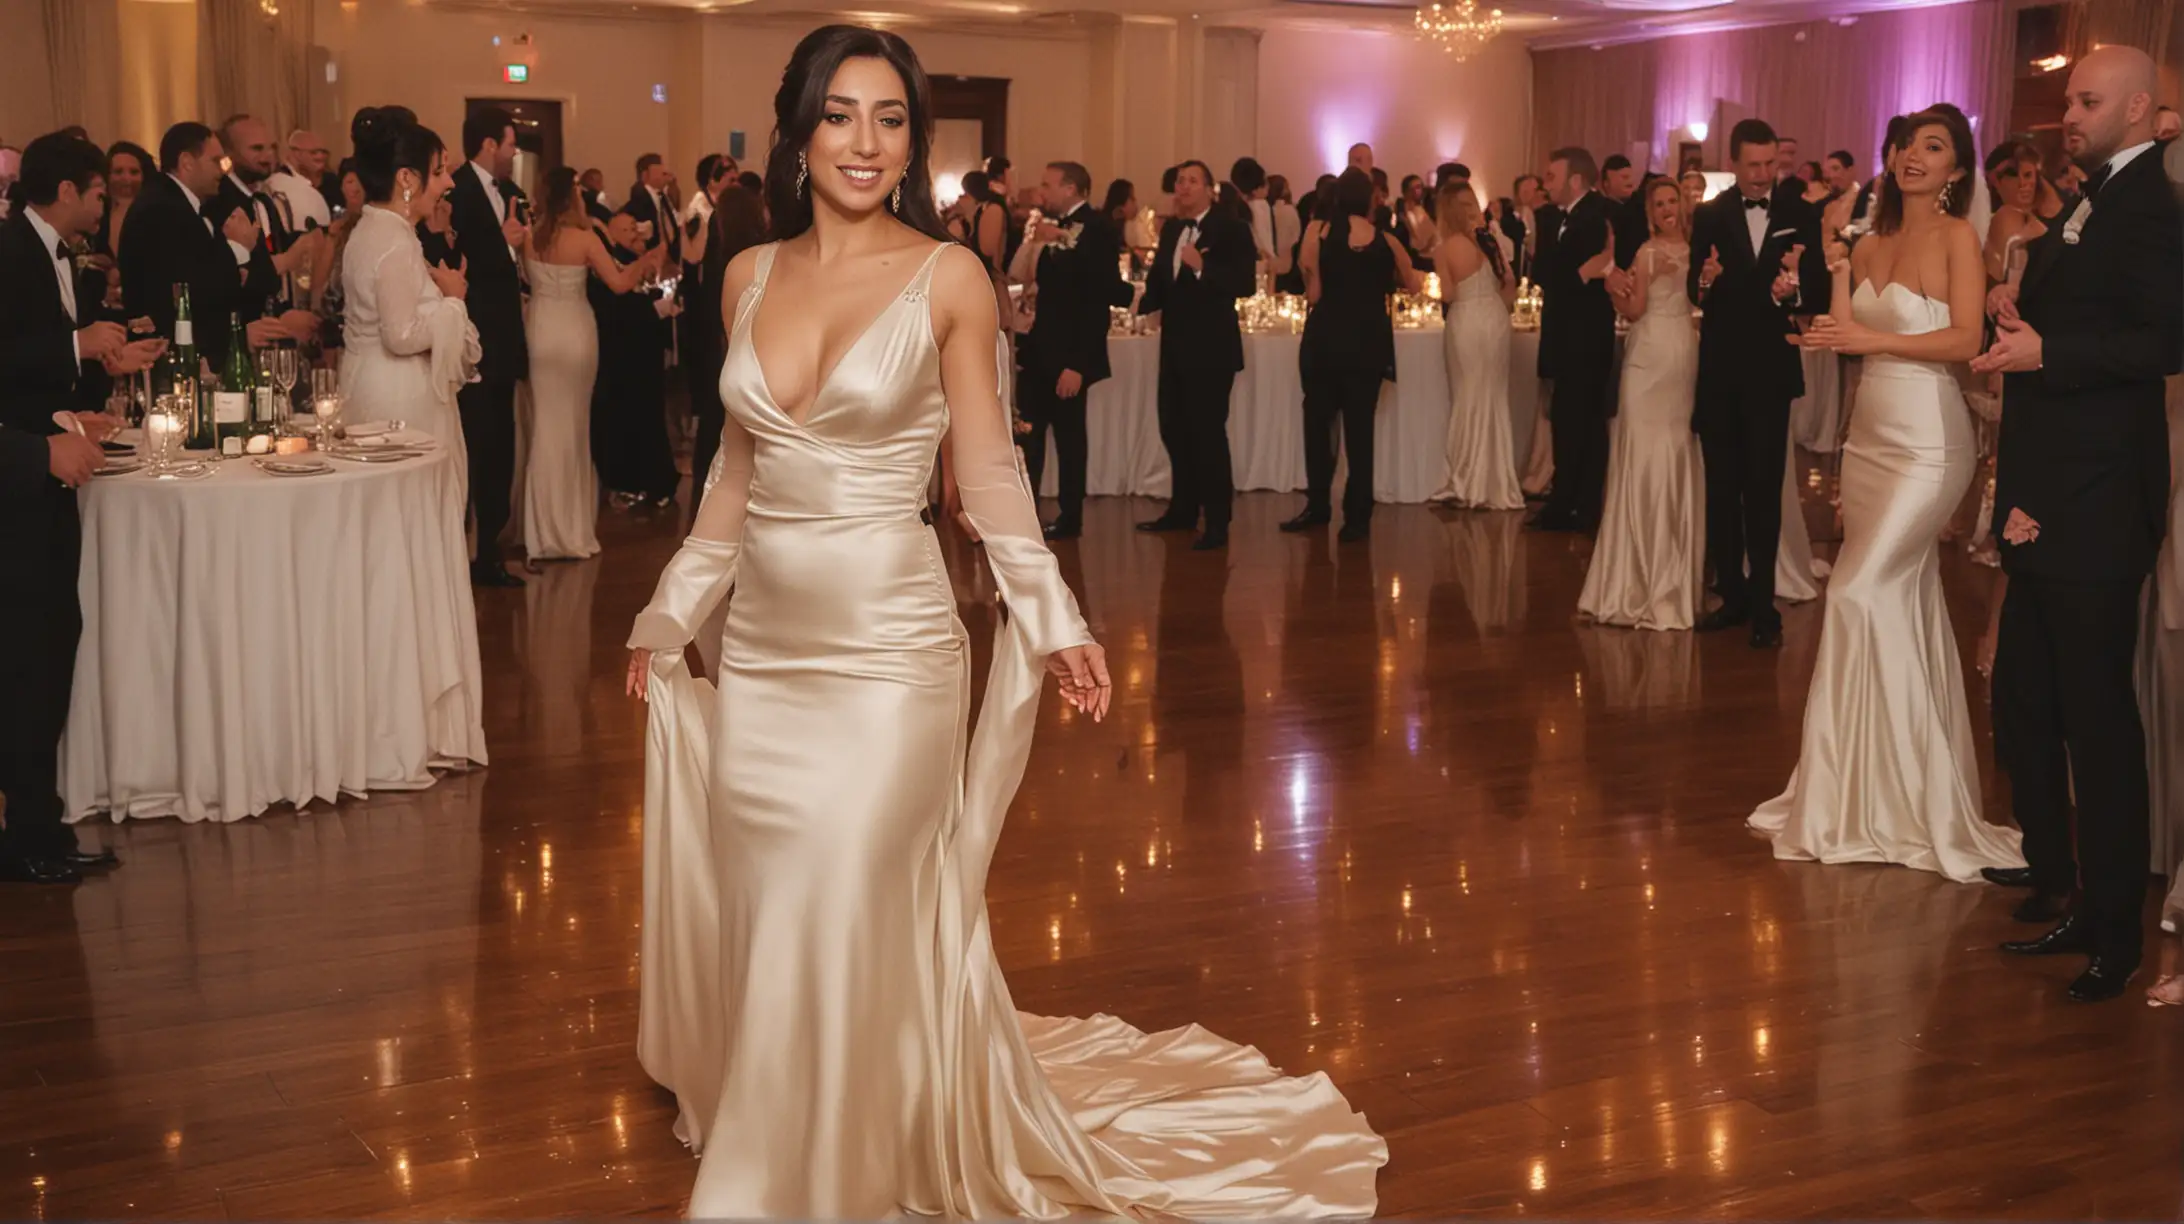 Elegant ArabAmerican Bride Dancing in Ivory Silk Satin Gown at Wedding Reception